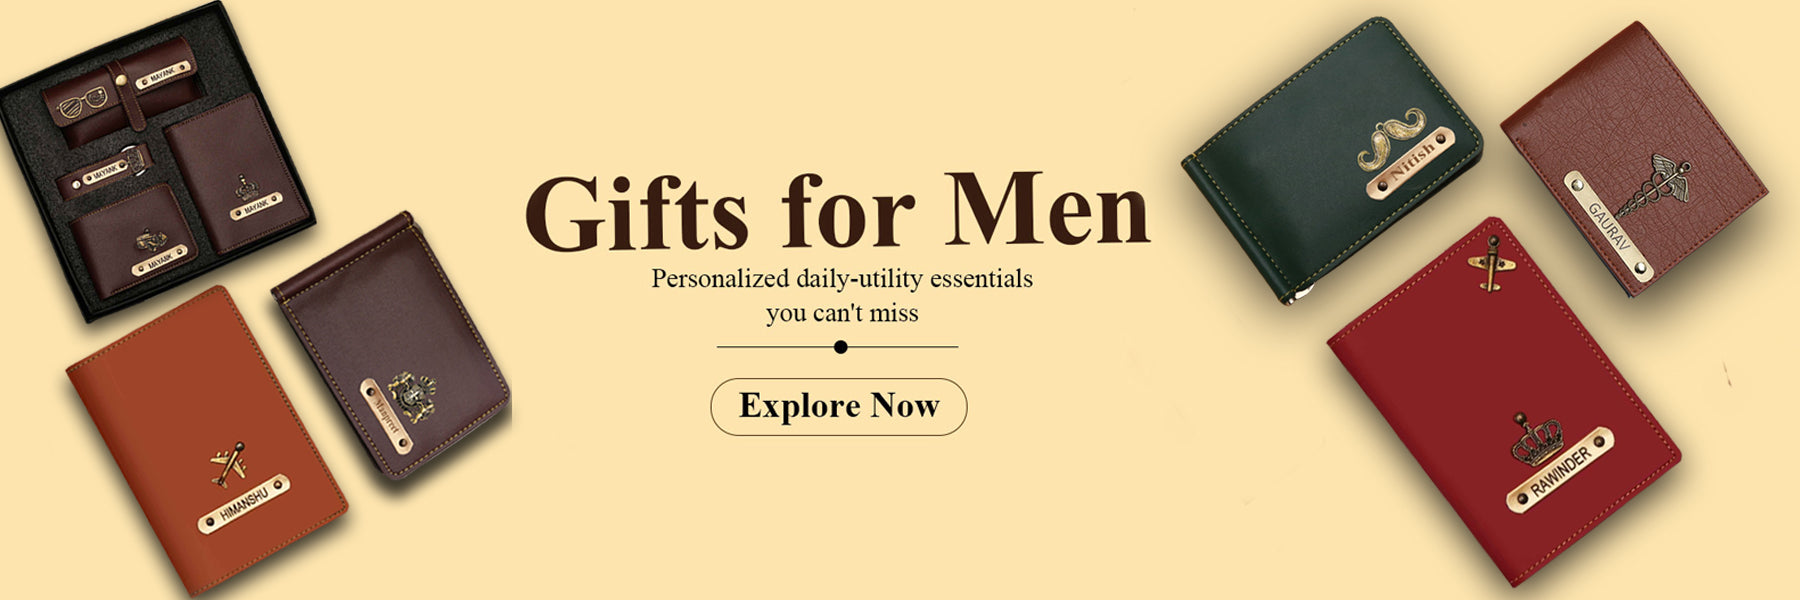 Top 15 Gift Ideas for Men [2020] | Art of Manliness